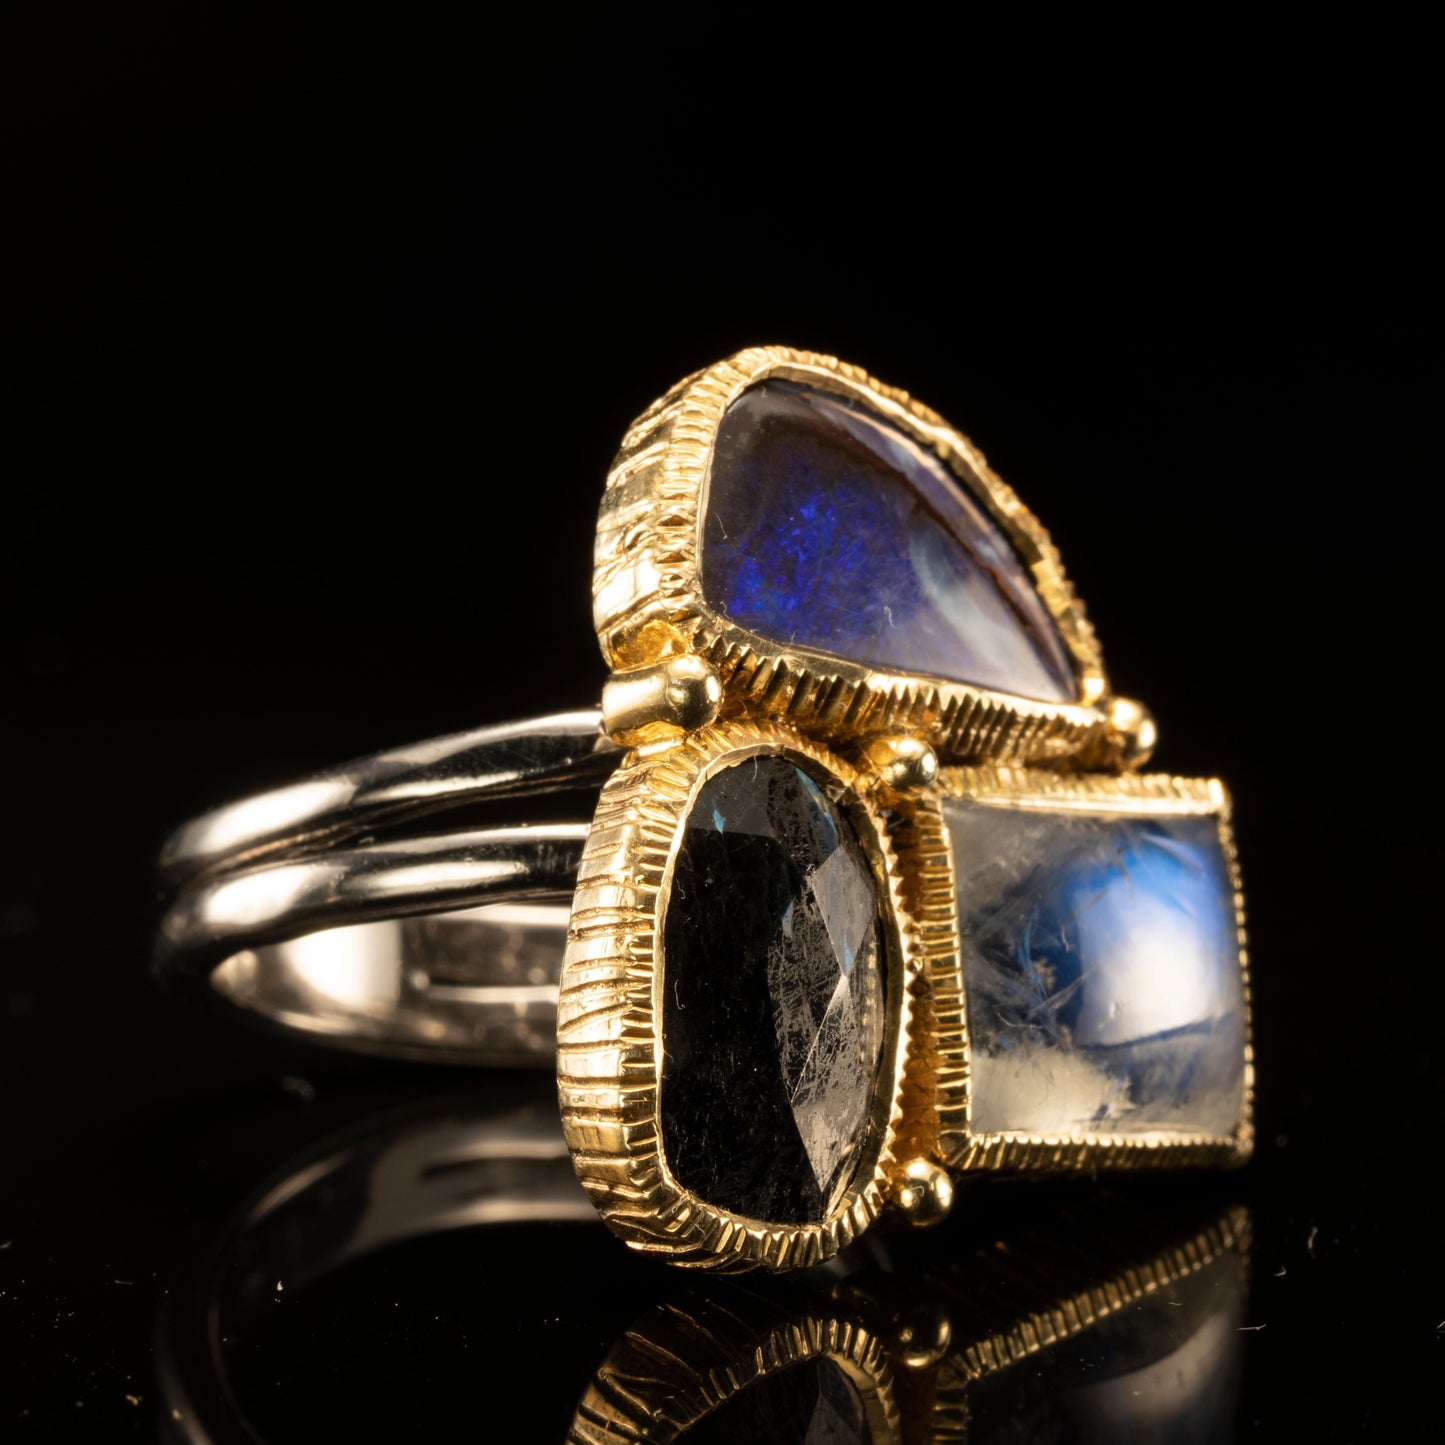 Spectrolite, Nuummite, and Boulder Opal Ring